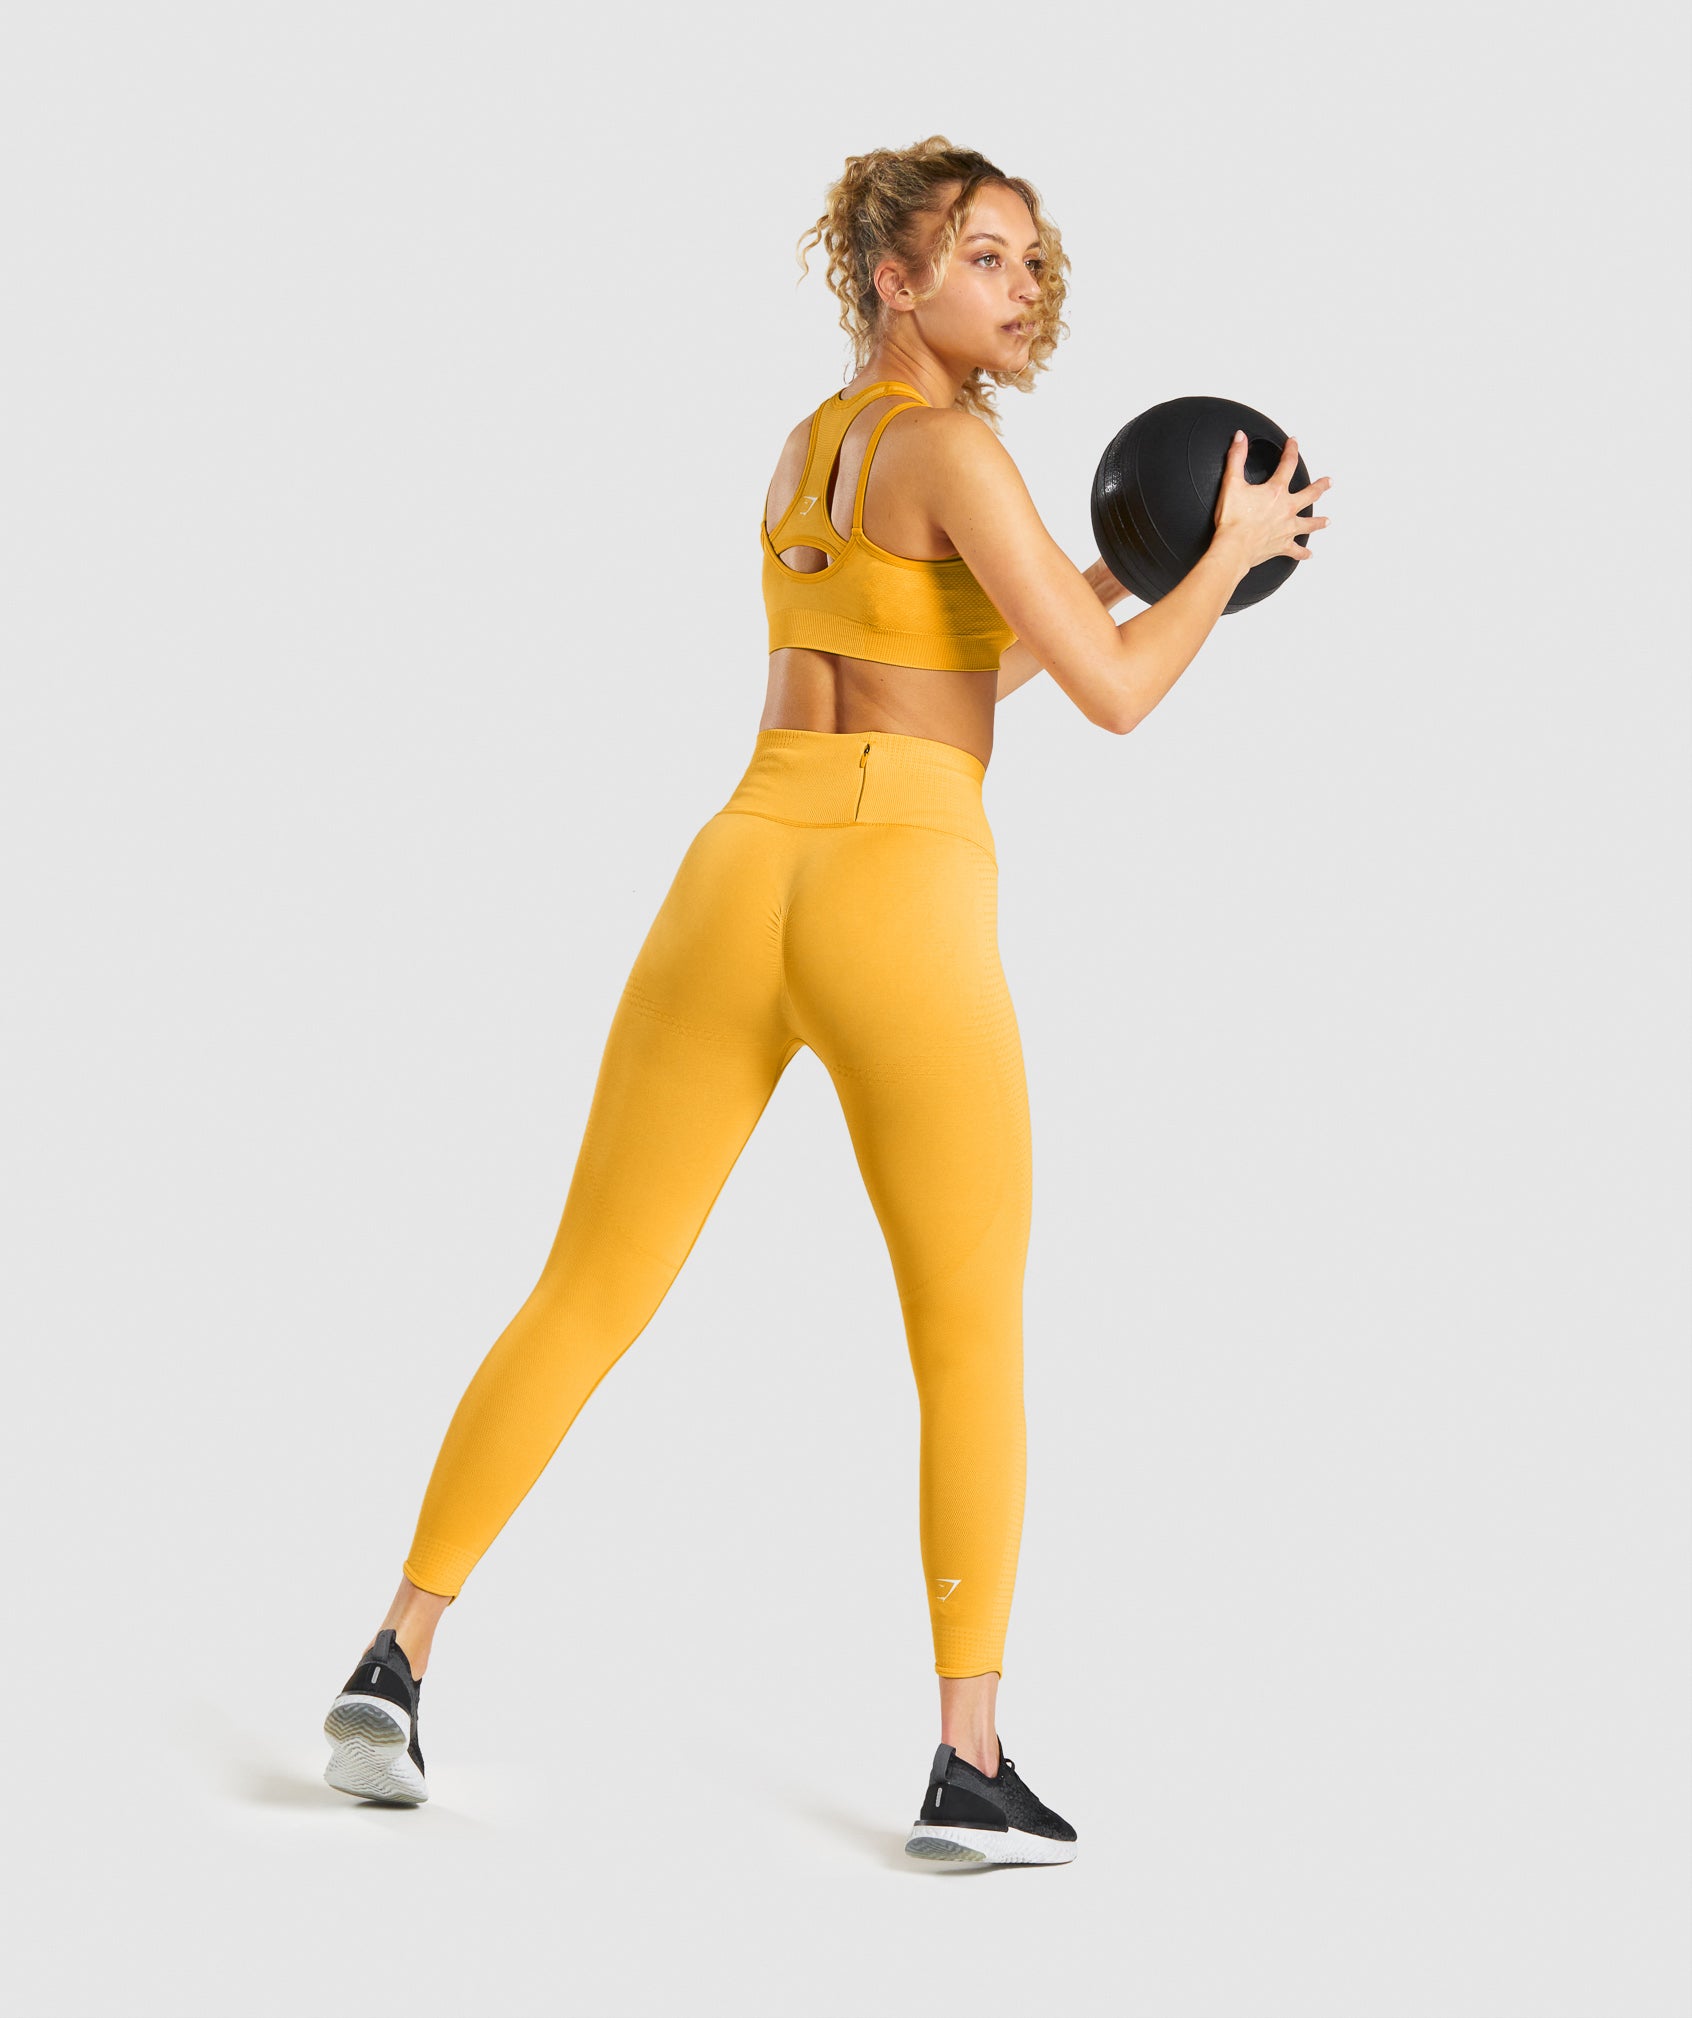 Gymshark Outfit: Yellow Vital Seamless Top and Teal Animal Leggings